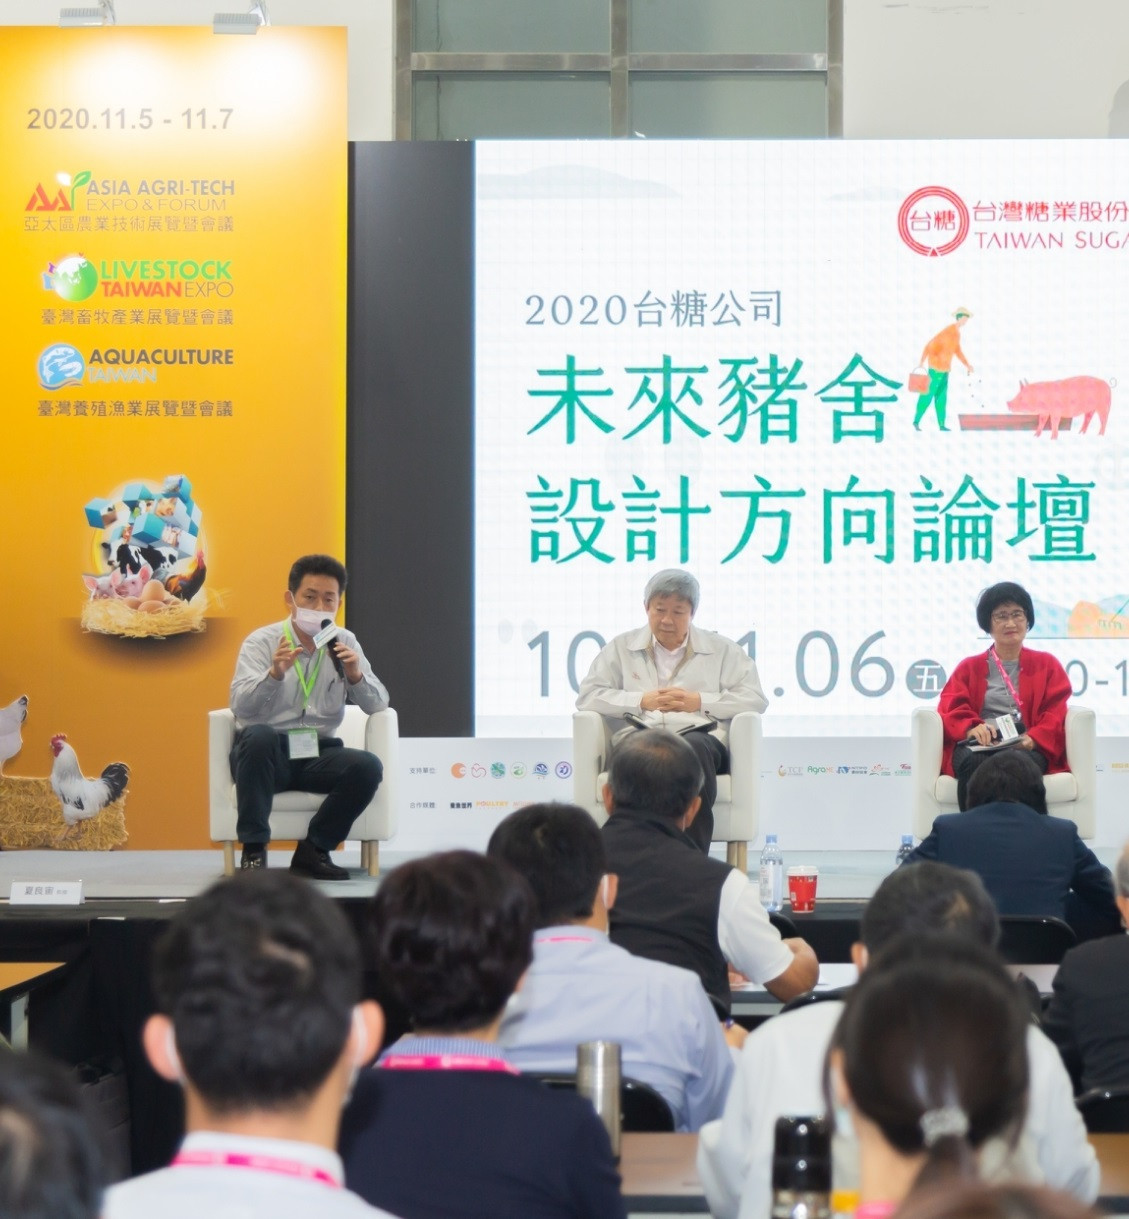 2020 Show Review: Asia Agritech Expo & Forum, Aquaculture Taiwan, Livestock Taiwan Expo & Forum